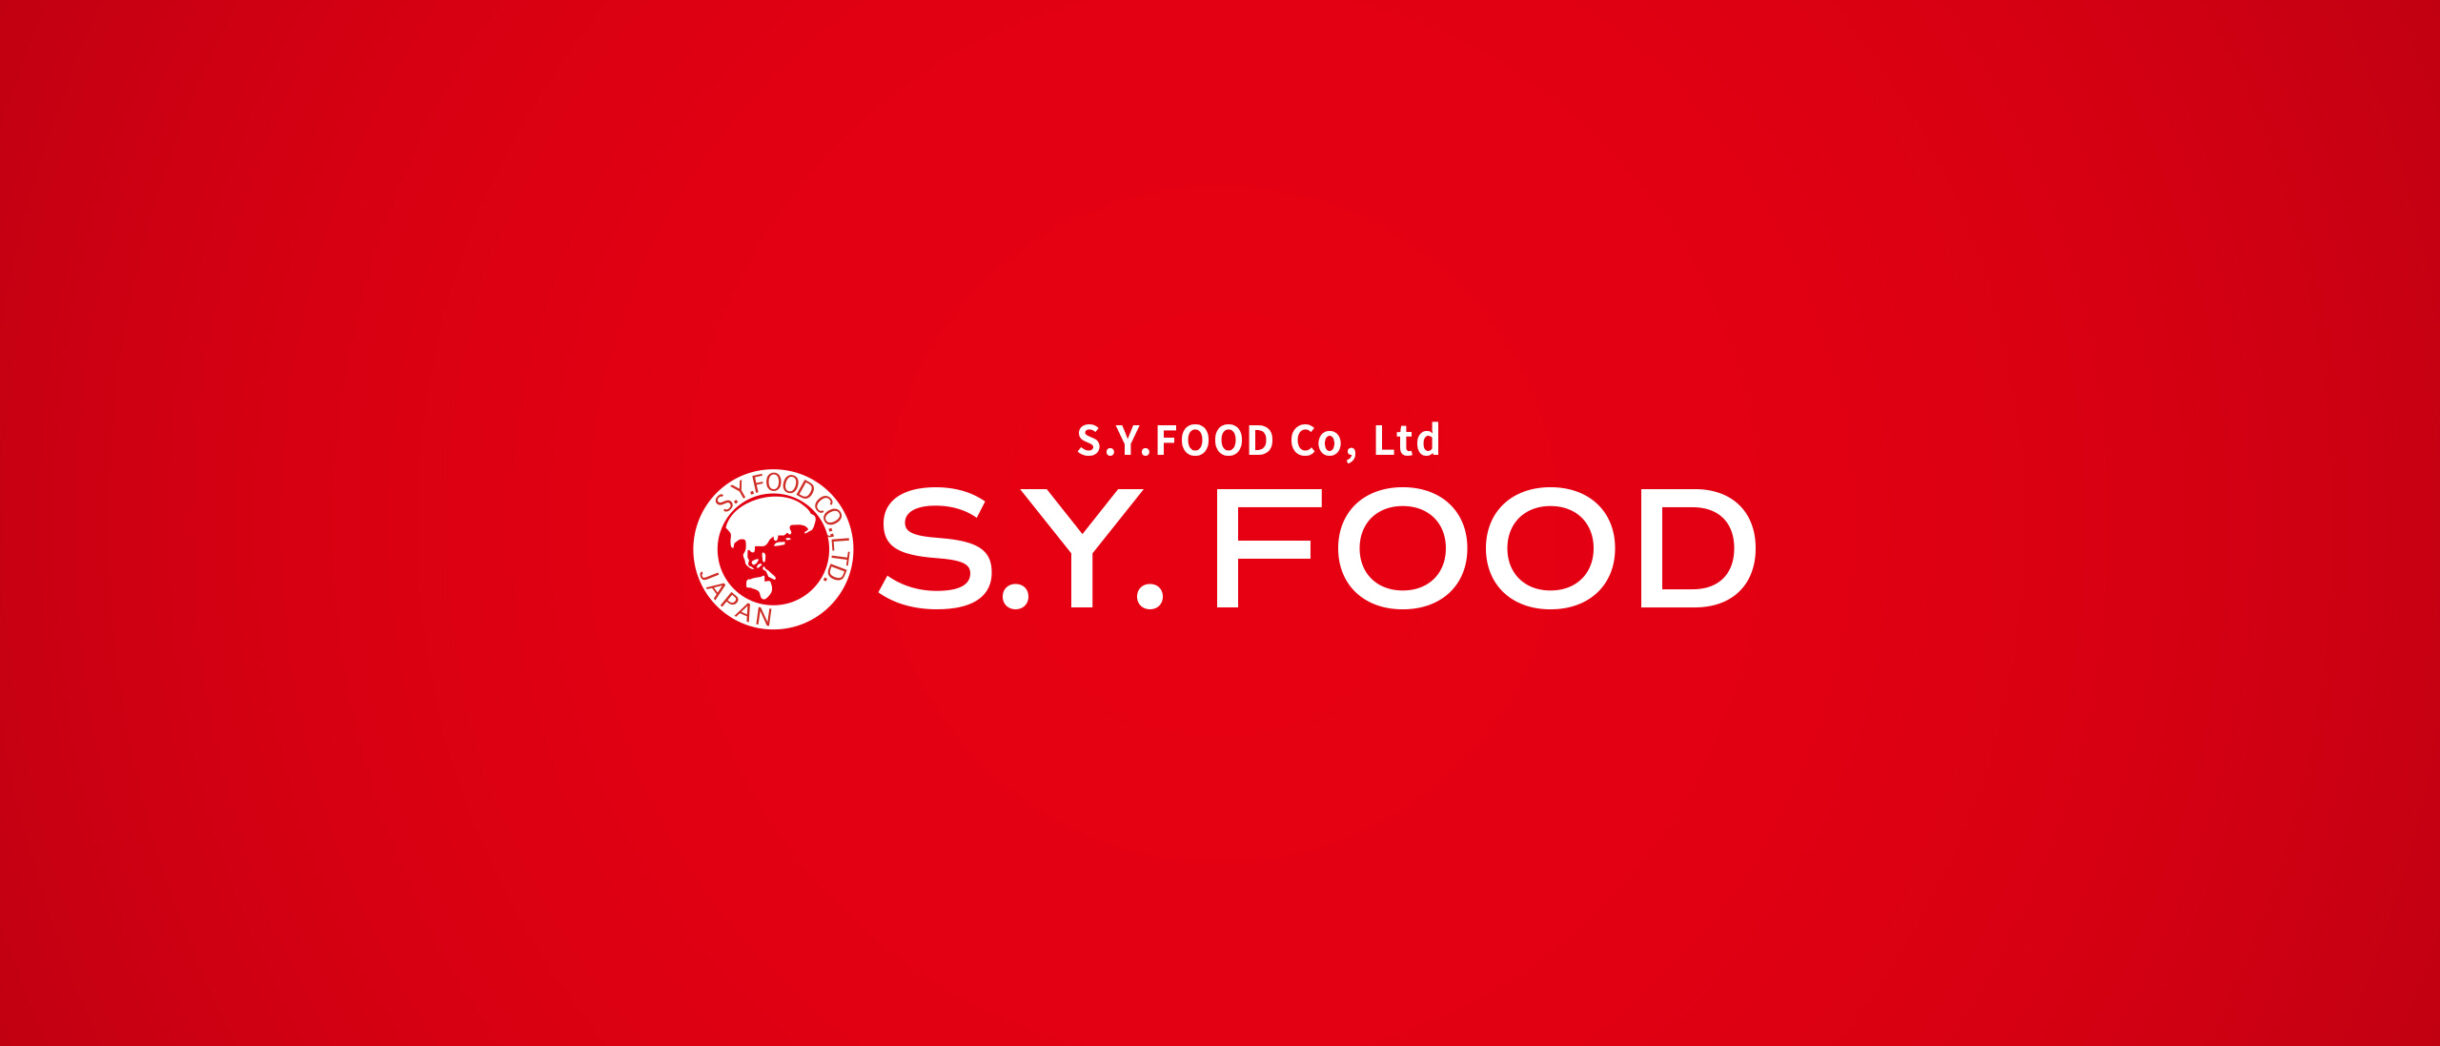 S.Y.FOOD Co, Ltd